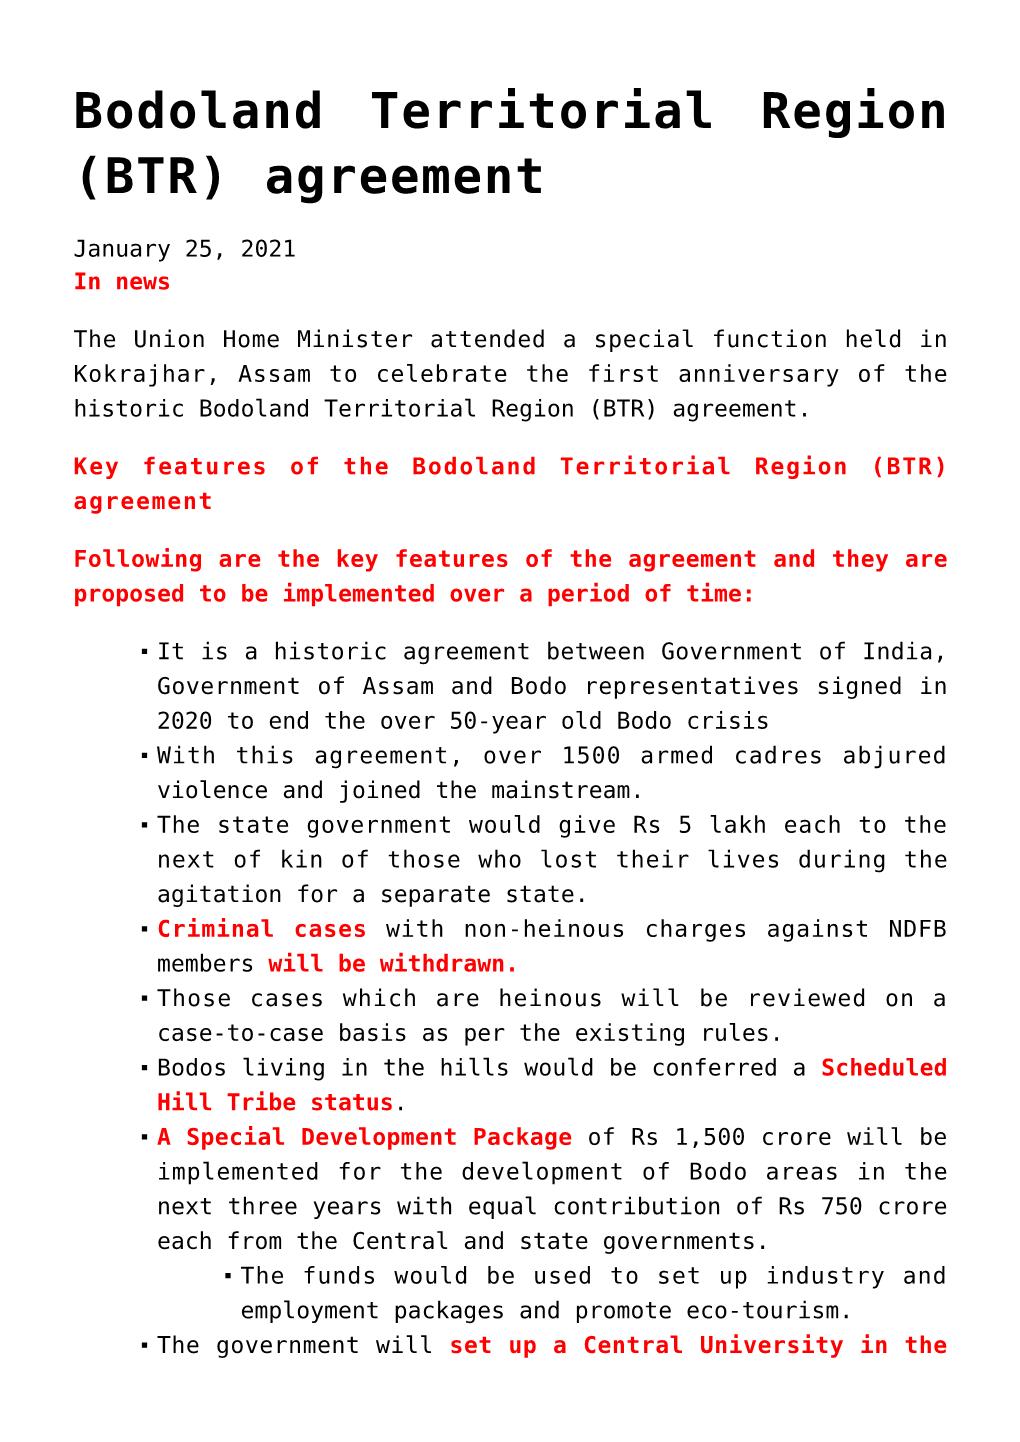 Bodoland Territorial Region (BTR) Agreement